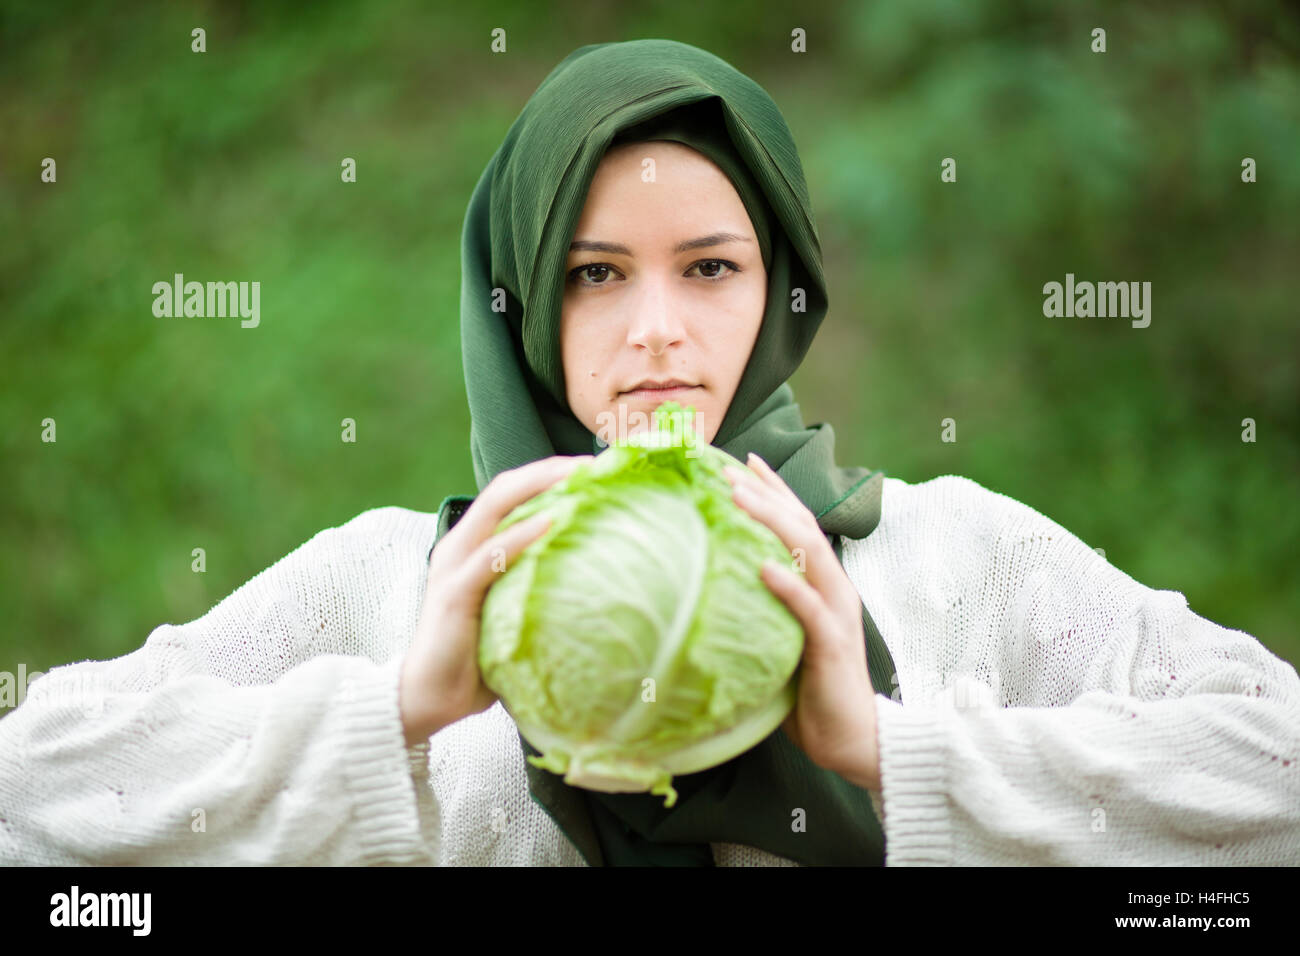 Vegano musulmano donna con velo tenendo un cavolo verza Foto Stock